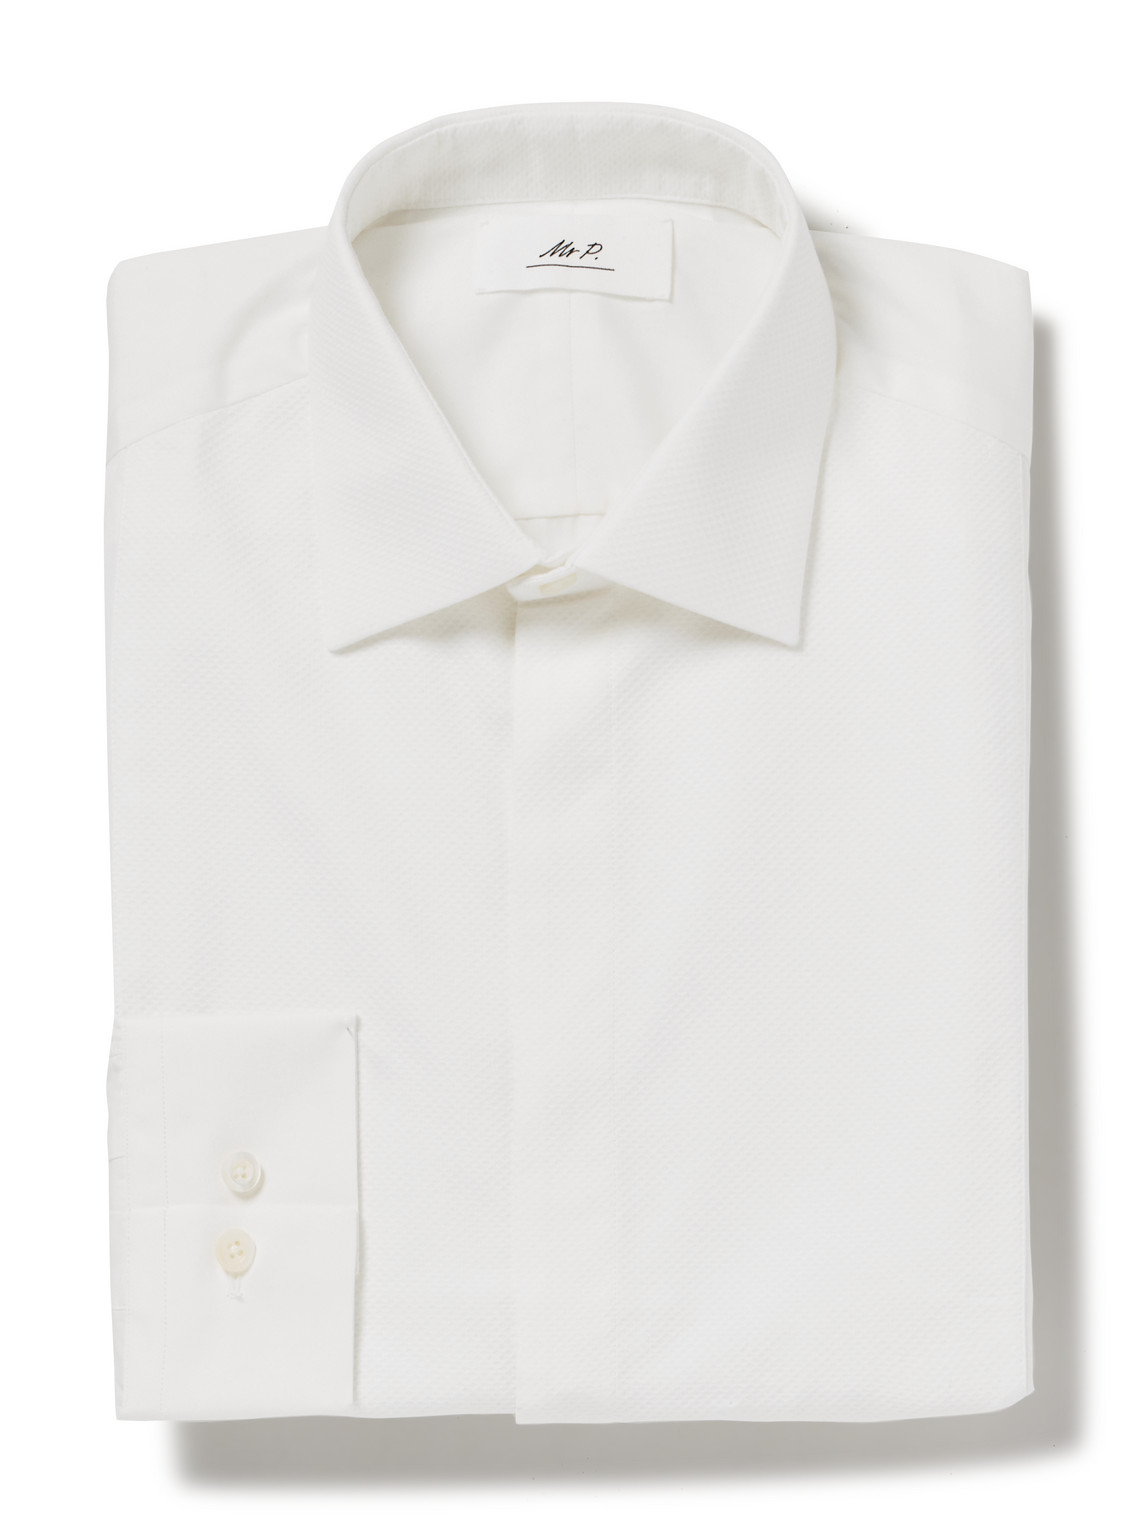 Mr P. Cotton Bib-Front Tuxedo Shirt